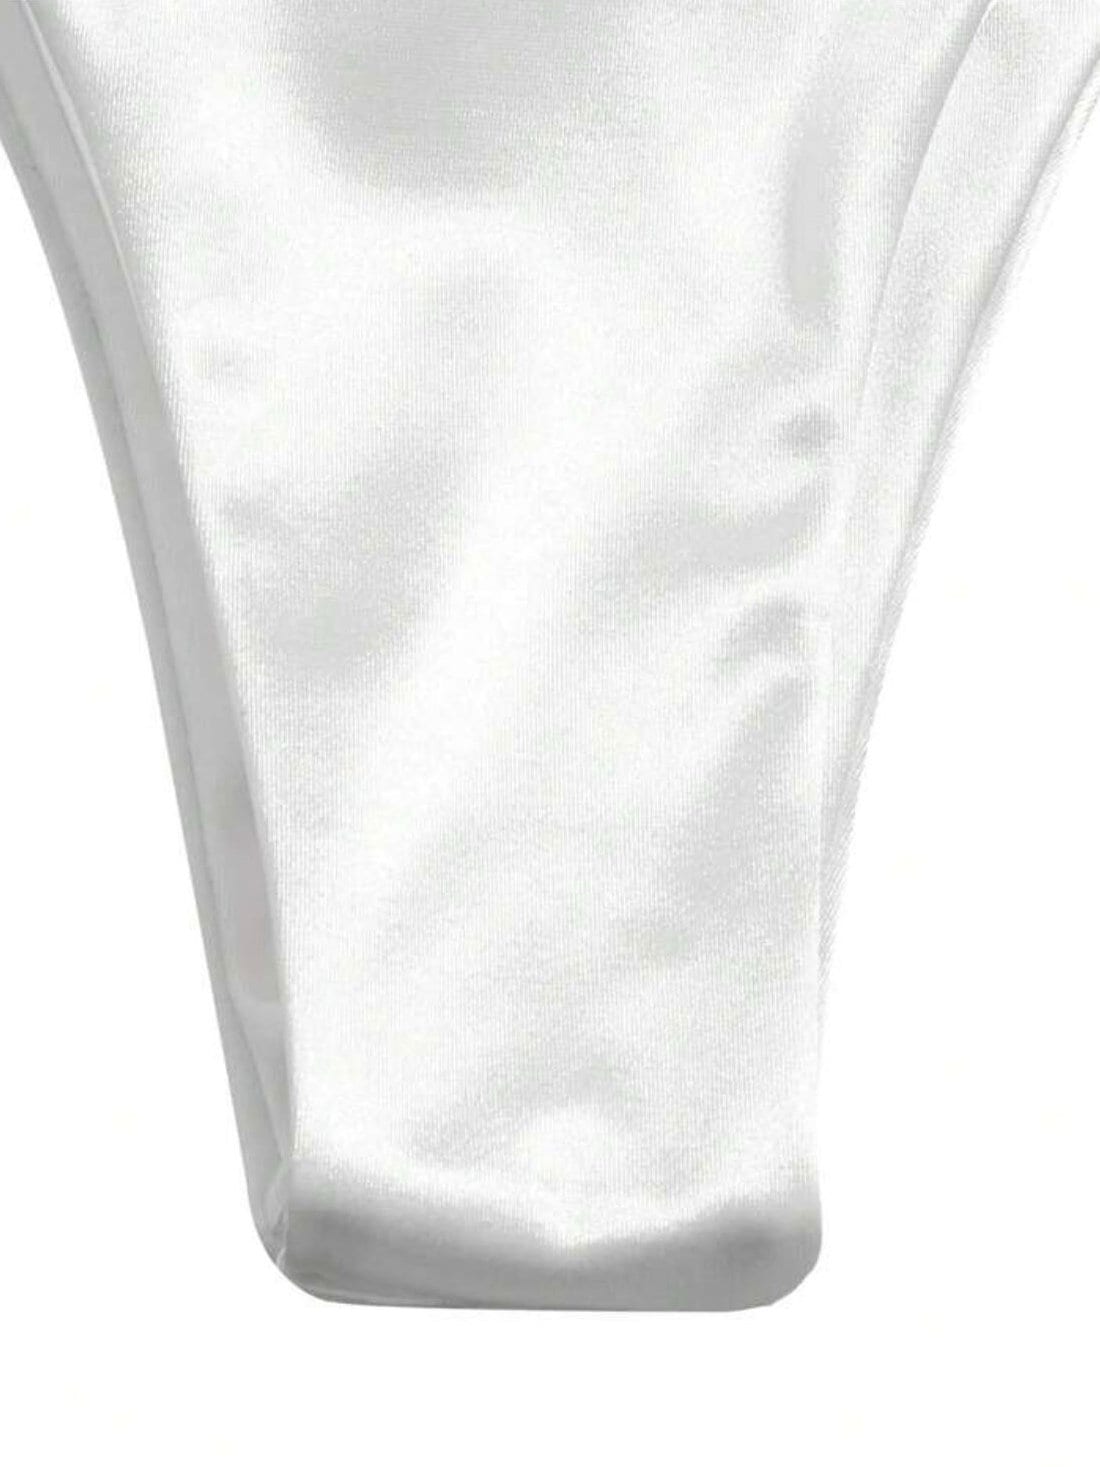 The Reena Satin White Honeymoon Halter Triangle Tie Side Bikini Swimsuit Set